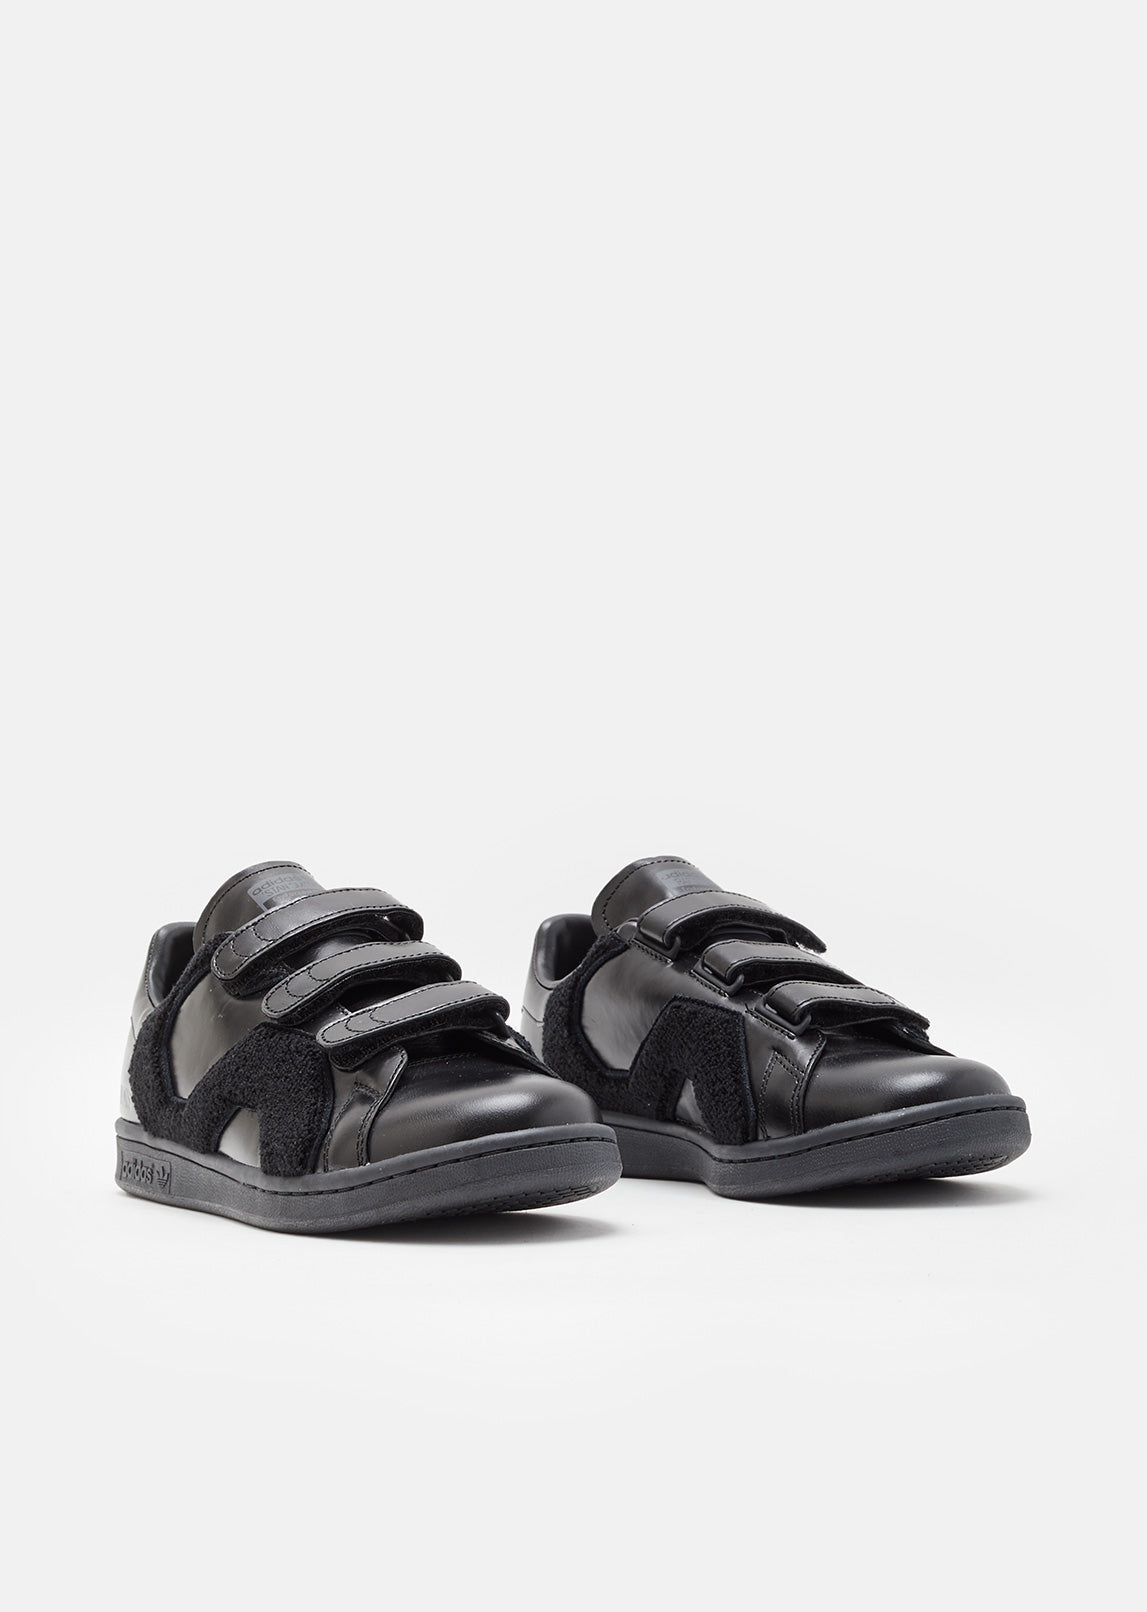 Stan Smith Velcro Sneakers by Raf x Adidas- La